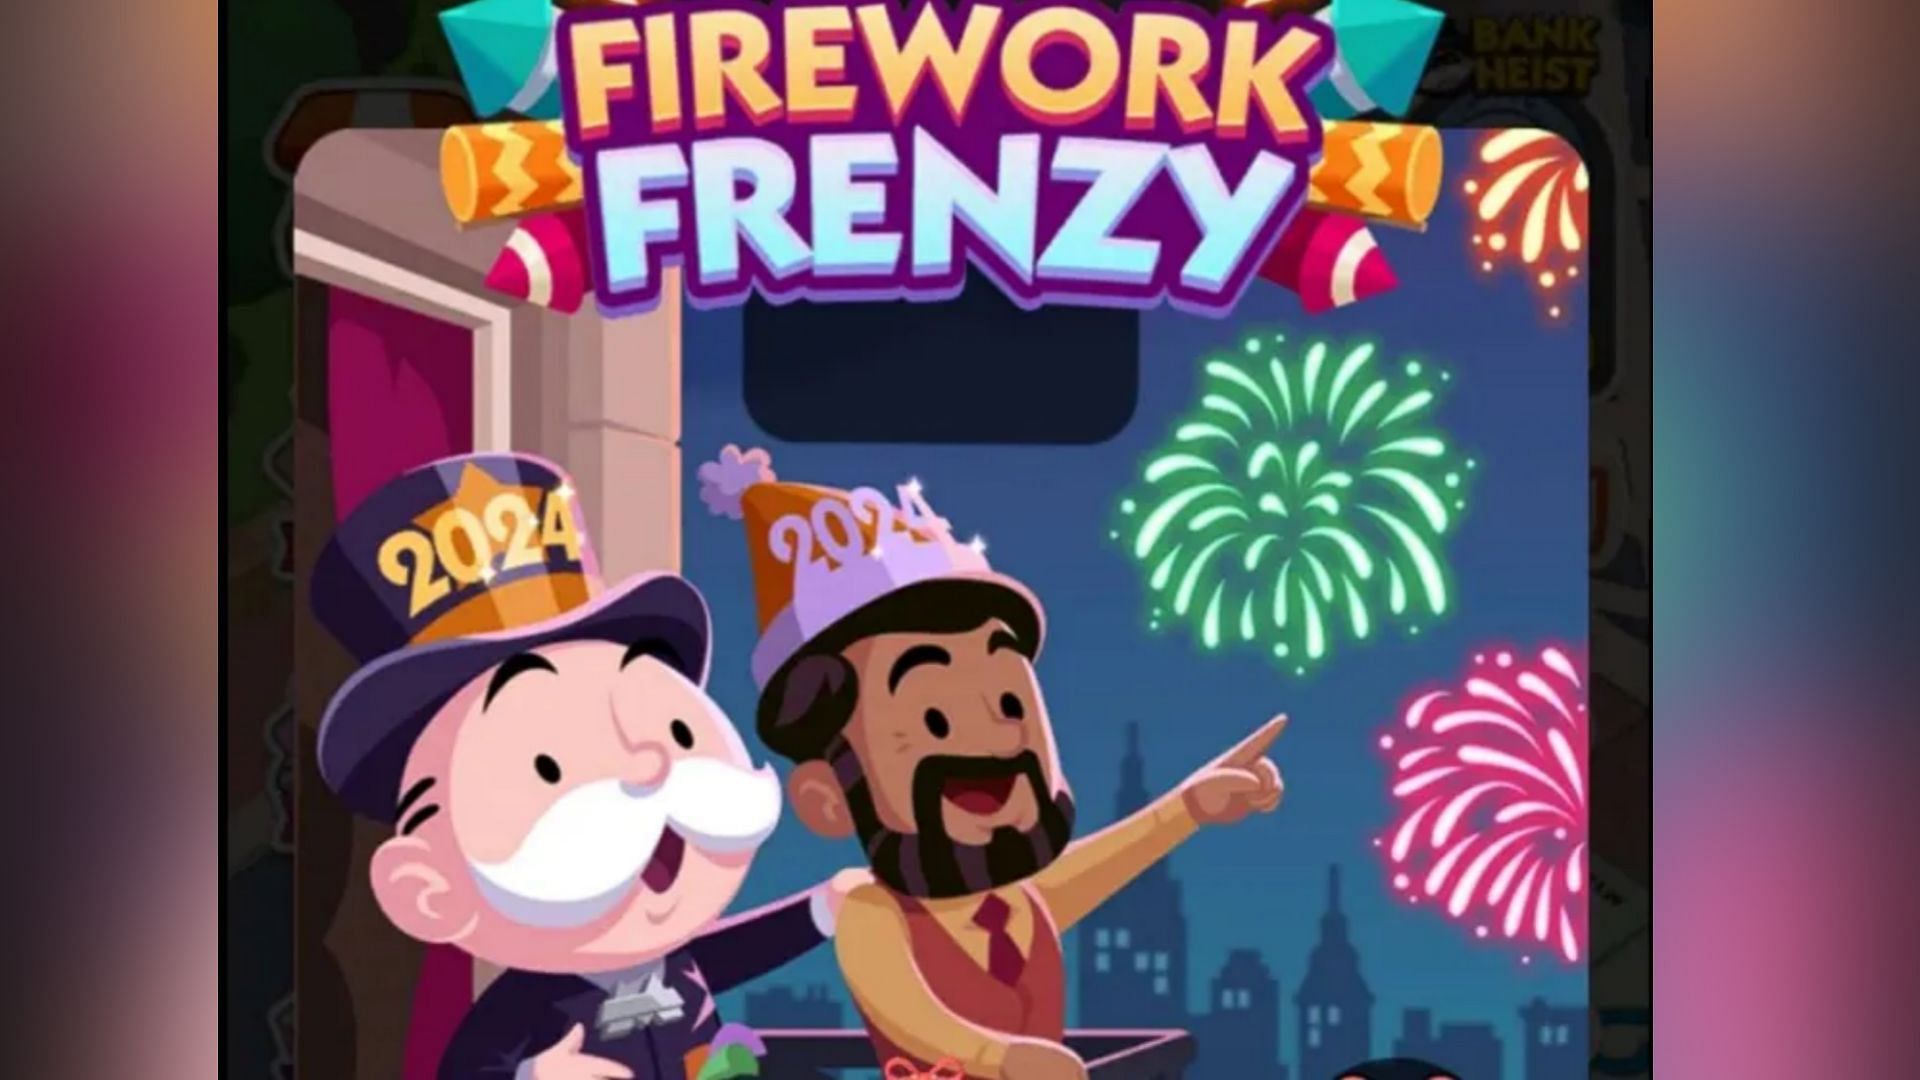 Monopoly Go players can play Firework Frenzy tournament to obtain free rewards (Image via Scopely) 